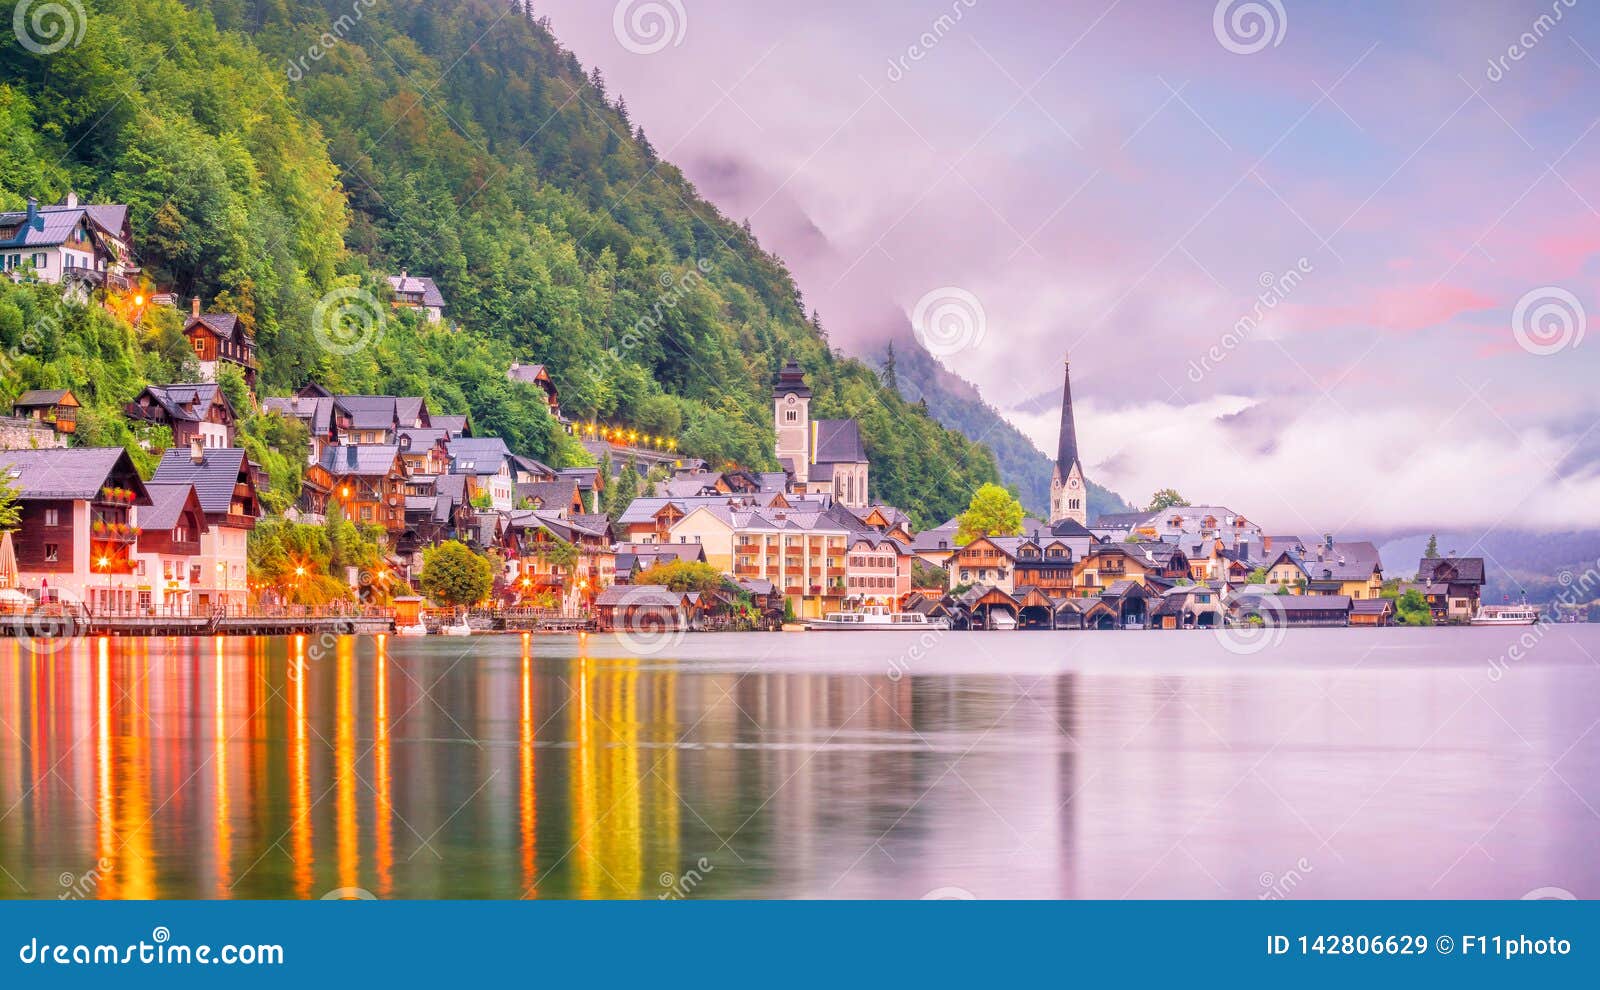 scenic view of famous hallstatt village in austria